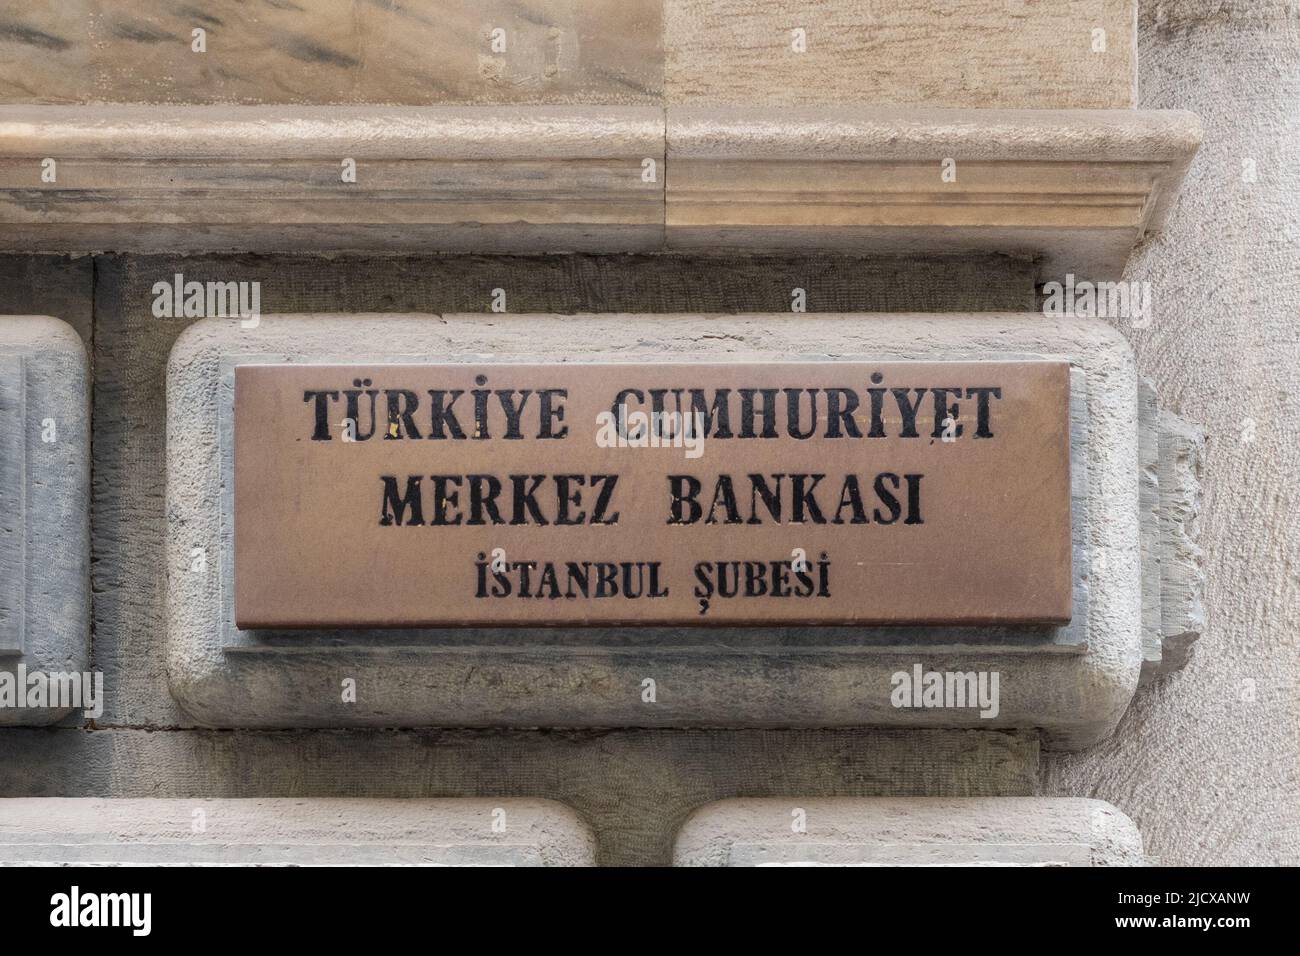 Banca centrale turca - Turkiye Cumhuriyet Merkez Bankasi - filiale di Istanbul, Turchia Foto Stock